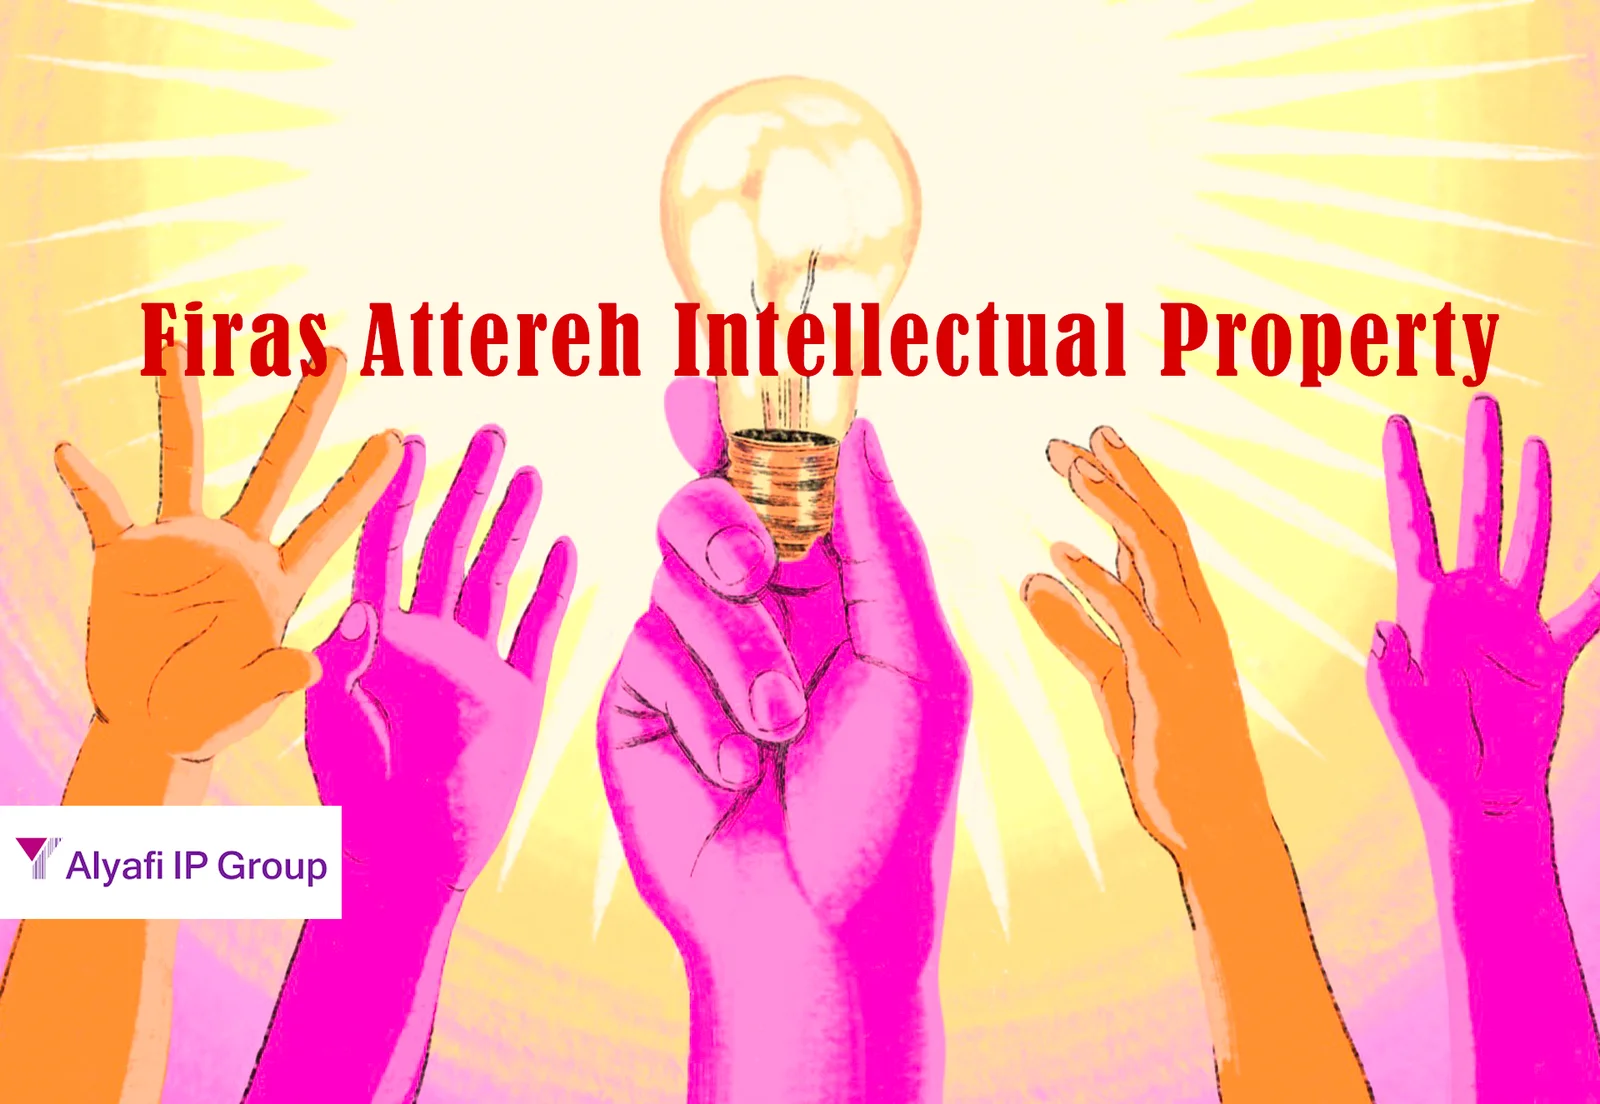 Firas-Attereh-Intellectual-Property